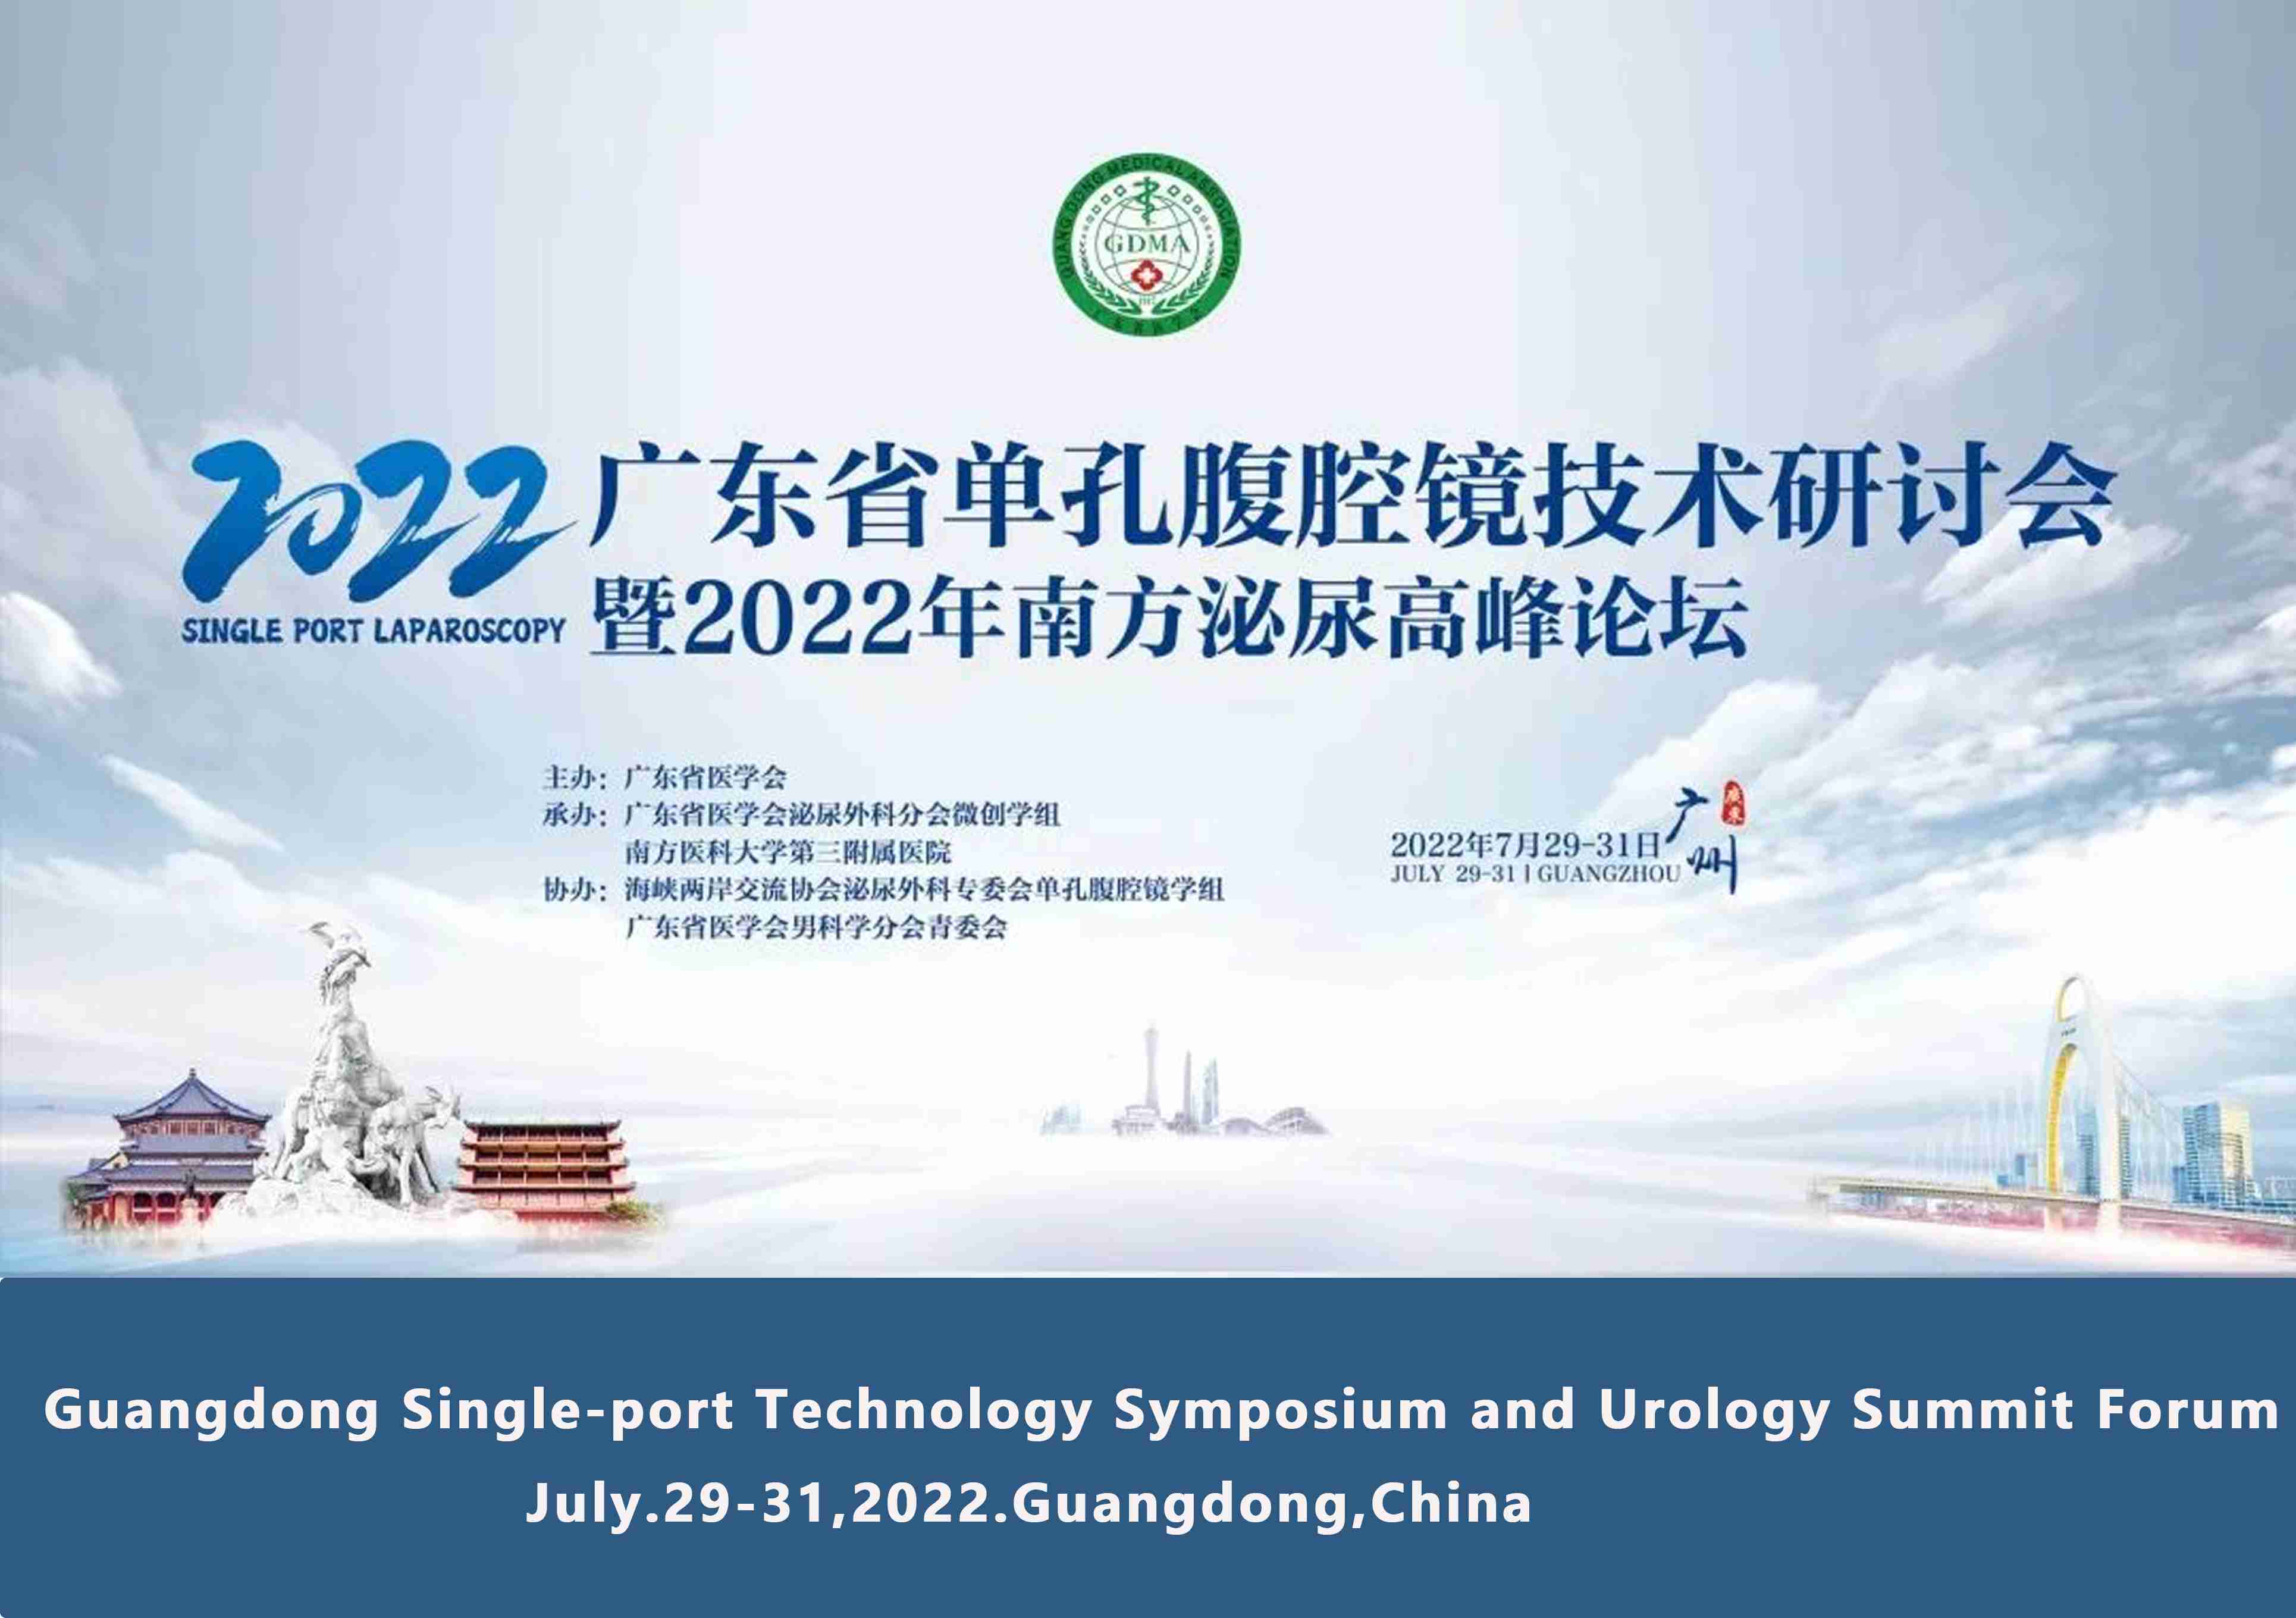 Guangdong Single-port Technology Symposium and Urology Summit Forum